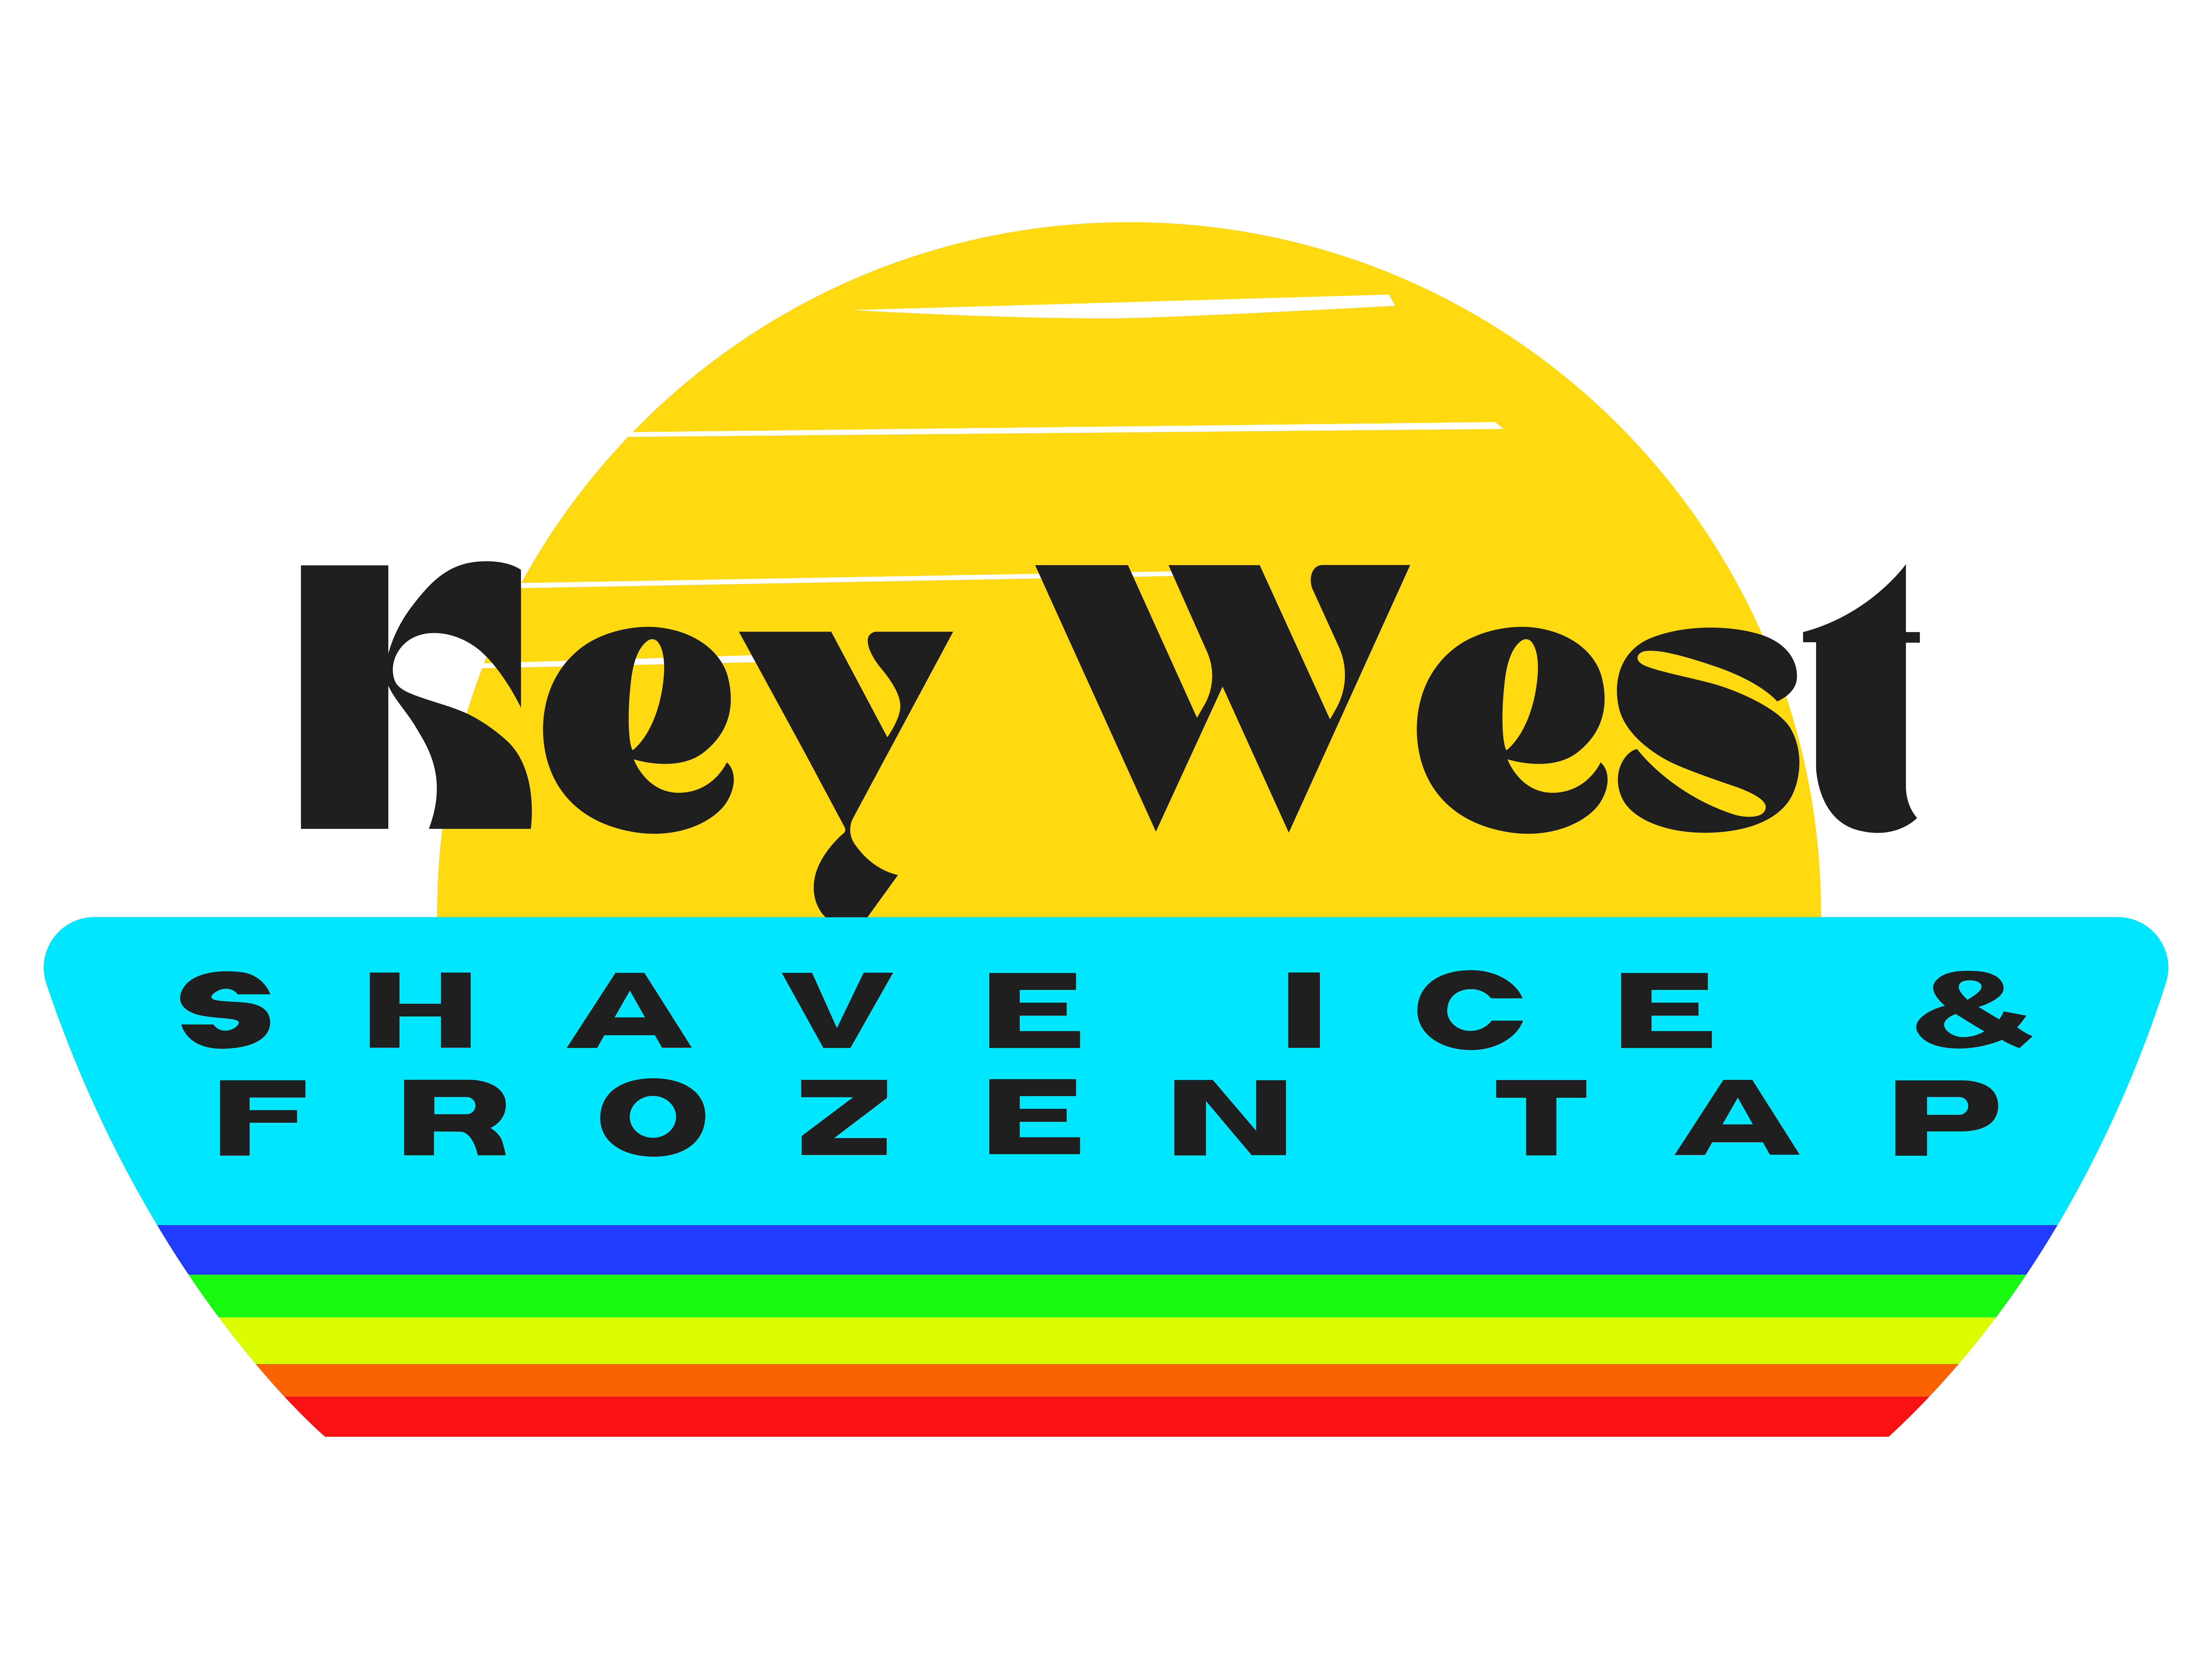 Key West Shave Ice & Frozen Tap